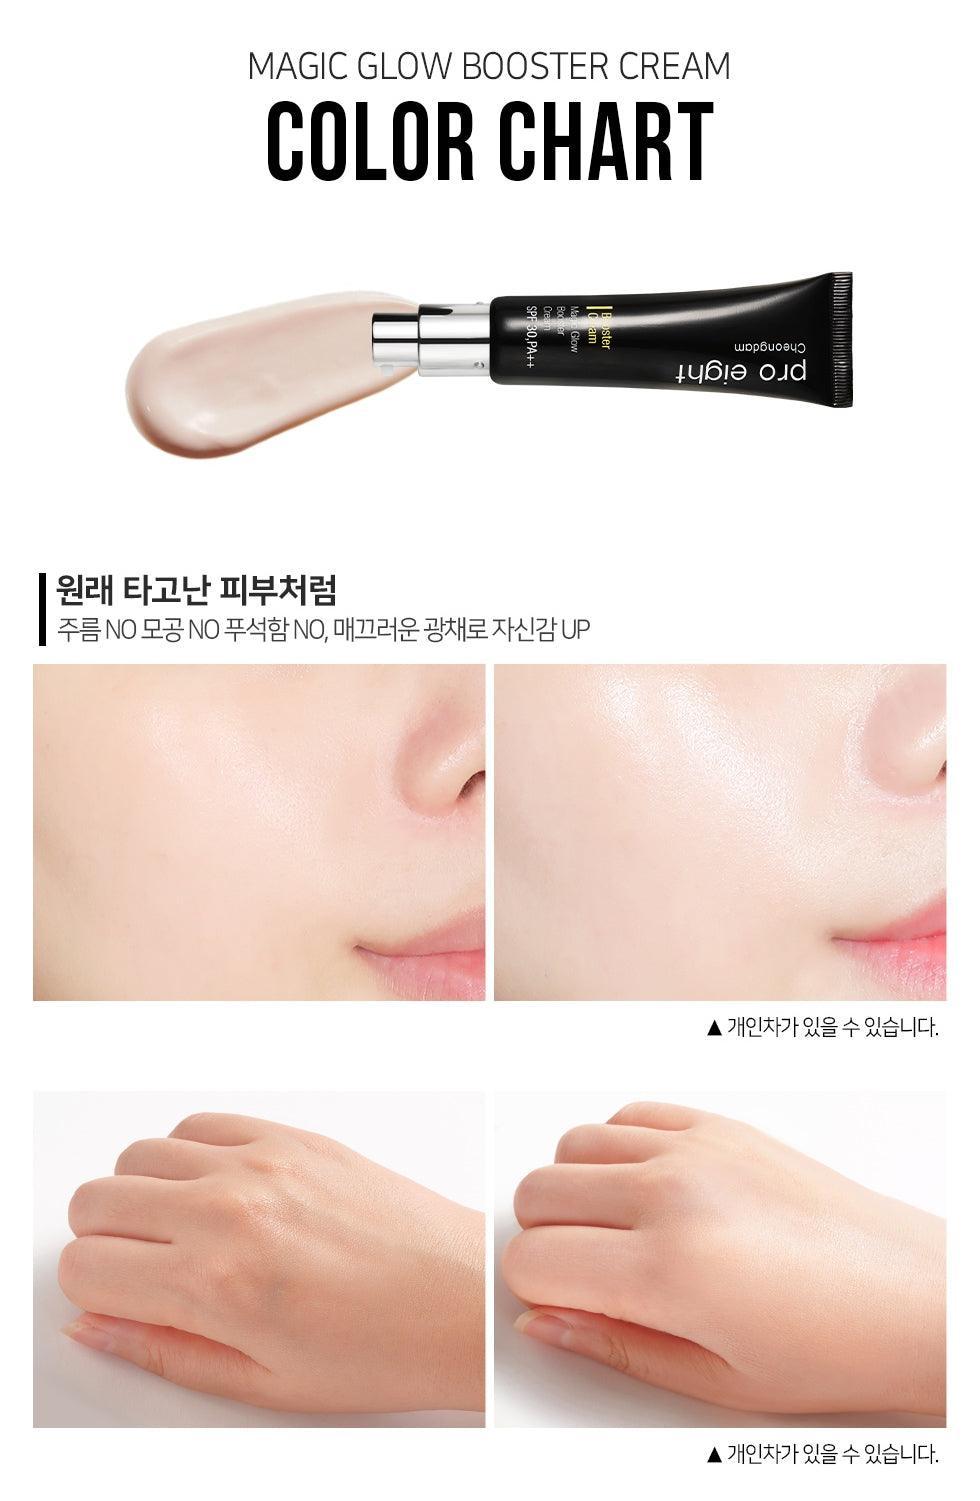 Kem Lót Pro 8 Cheongdam Magic Glow Booster Cream - Kallos Vietnam